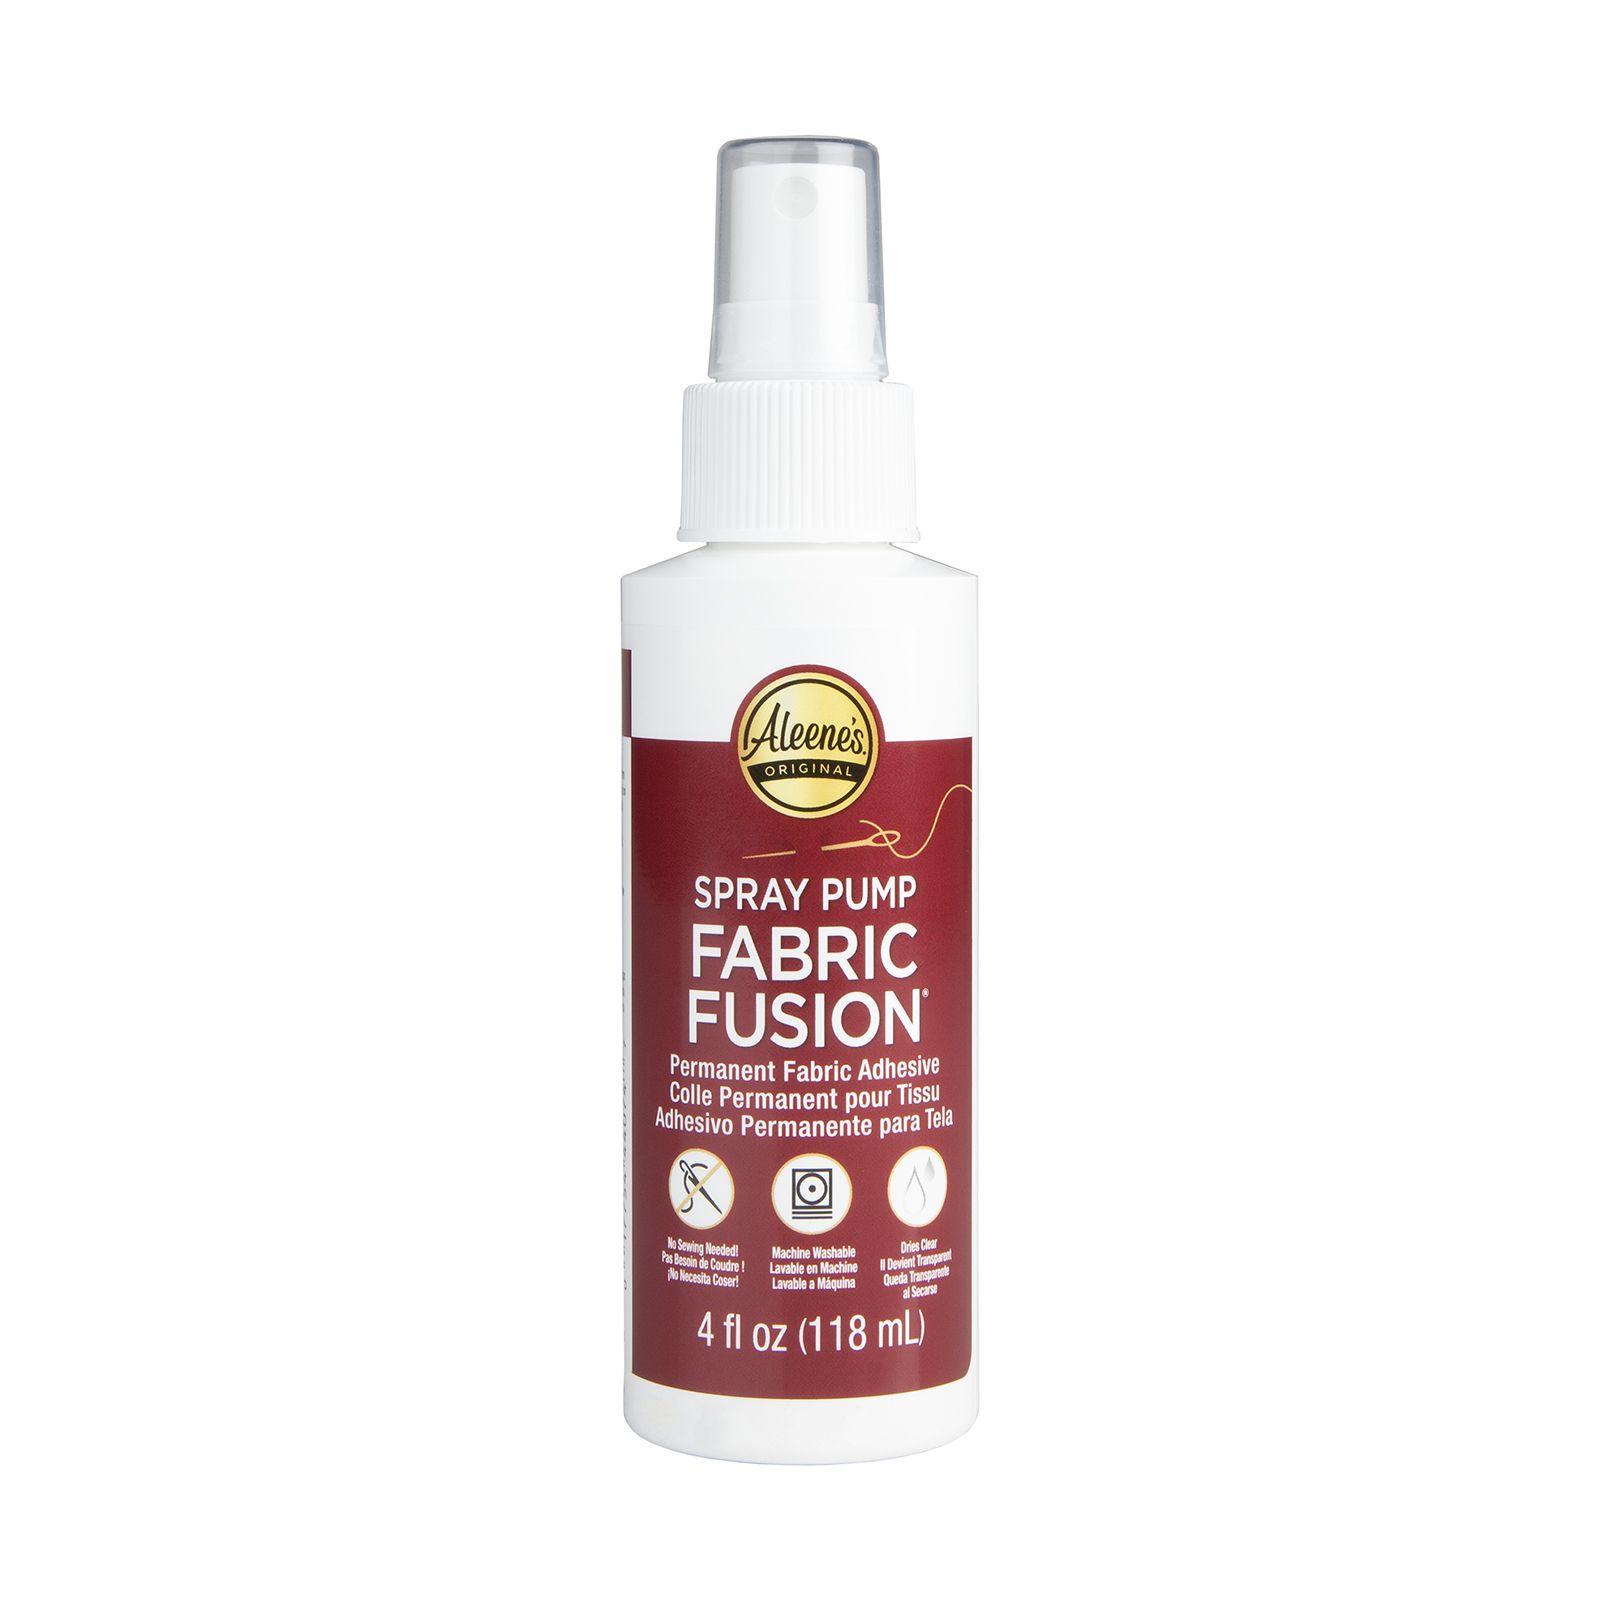 Aleene's • Fabric fusion glue permanent spray pump 118ml